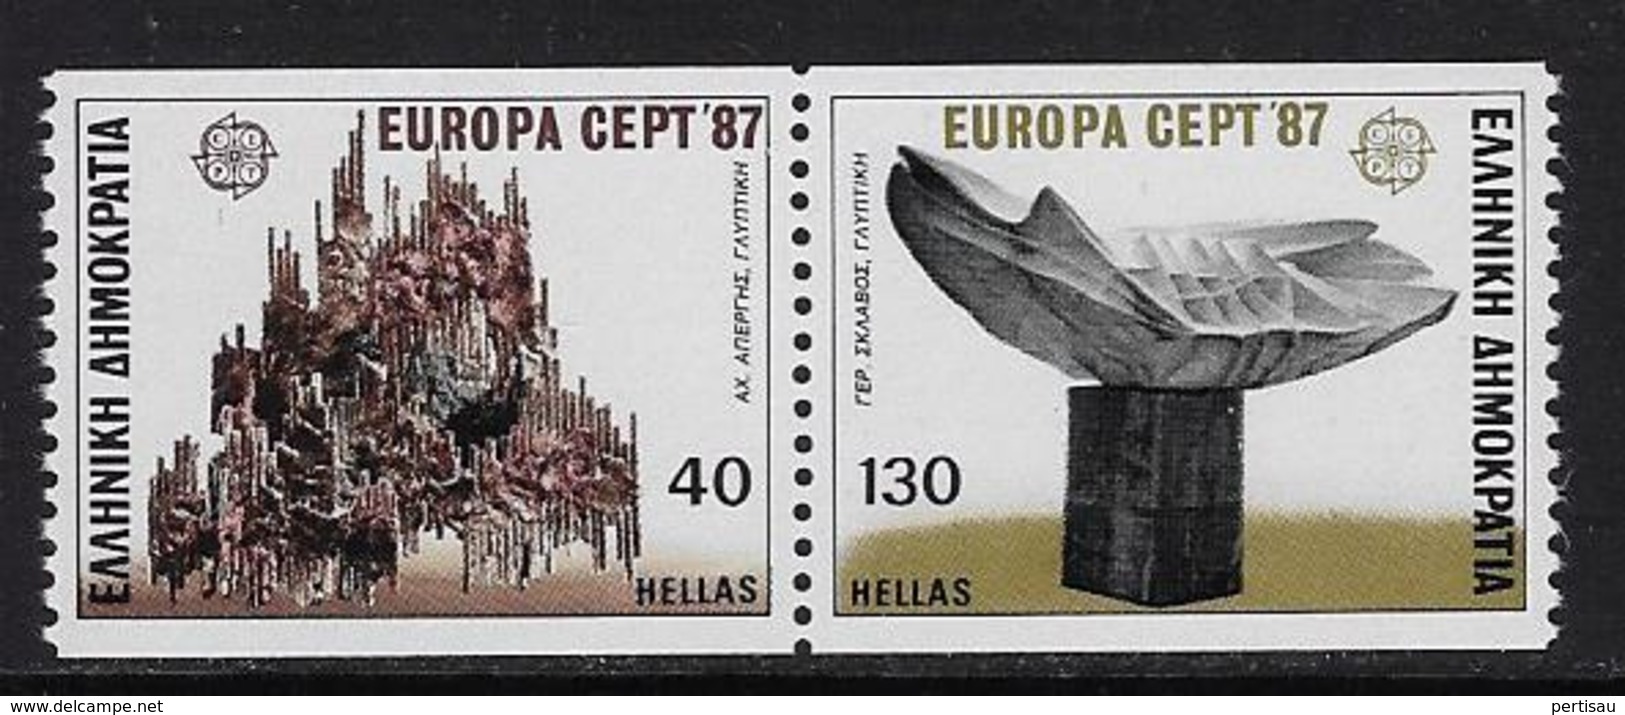 Europa-Cept Griekenland - 1987